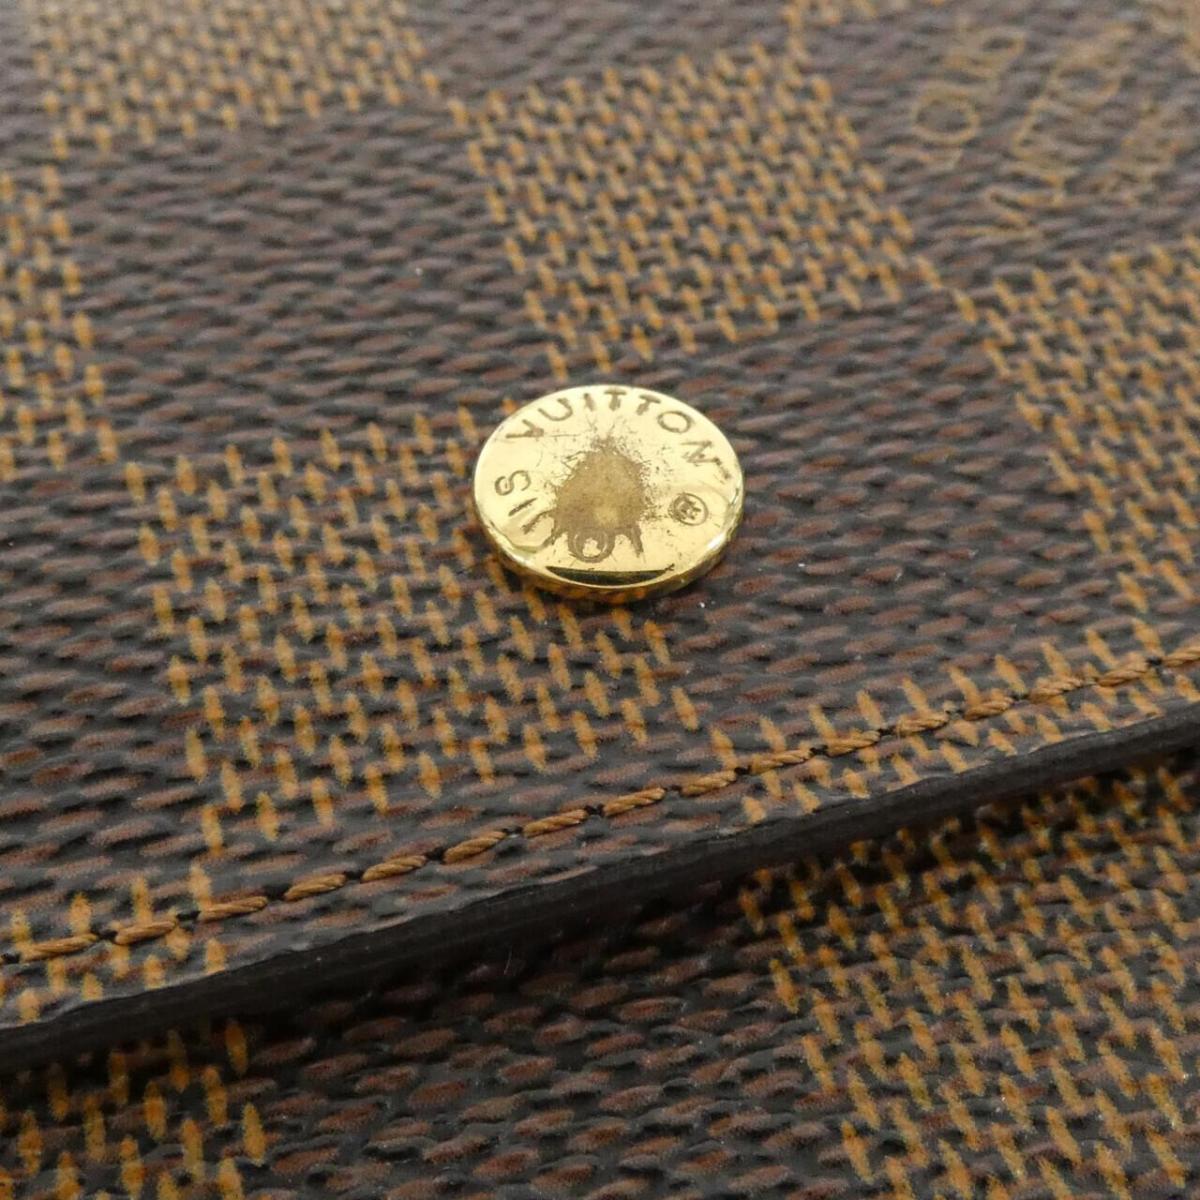 Louis Vuitton Damier Portefolio Series N61652 Wallet